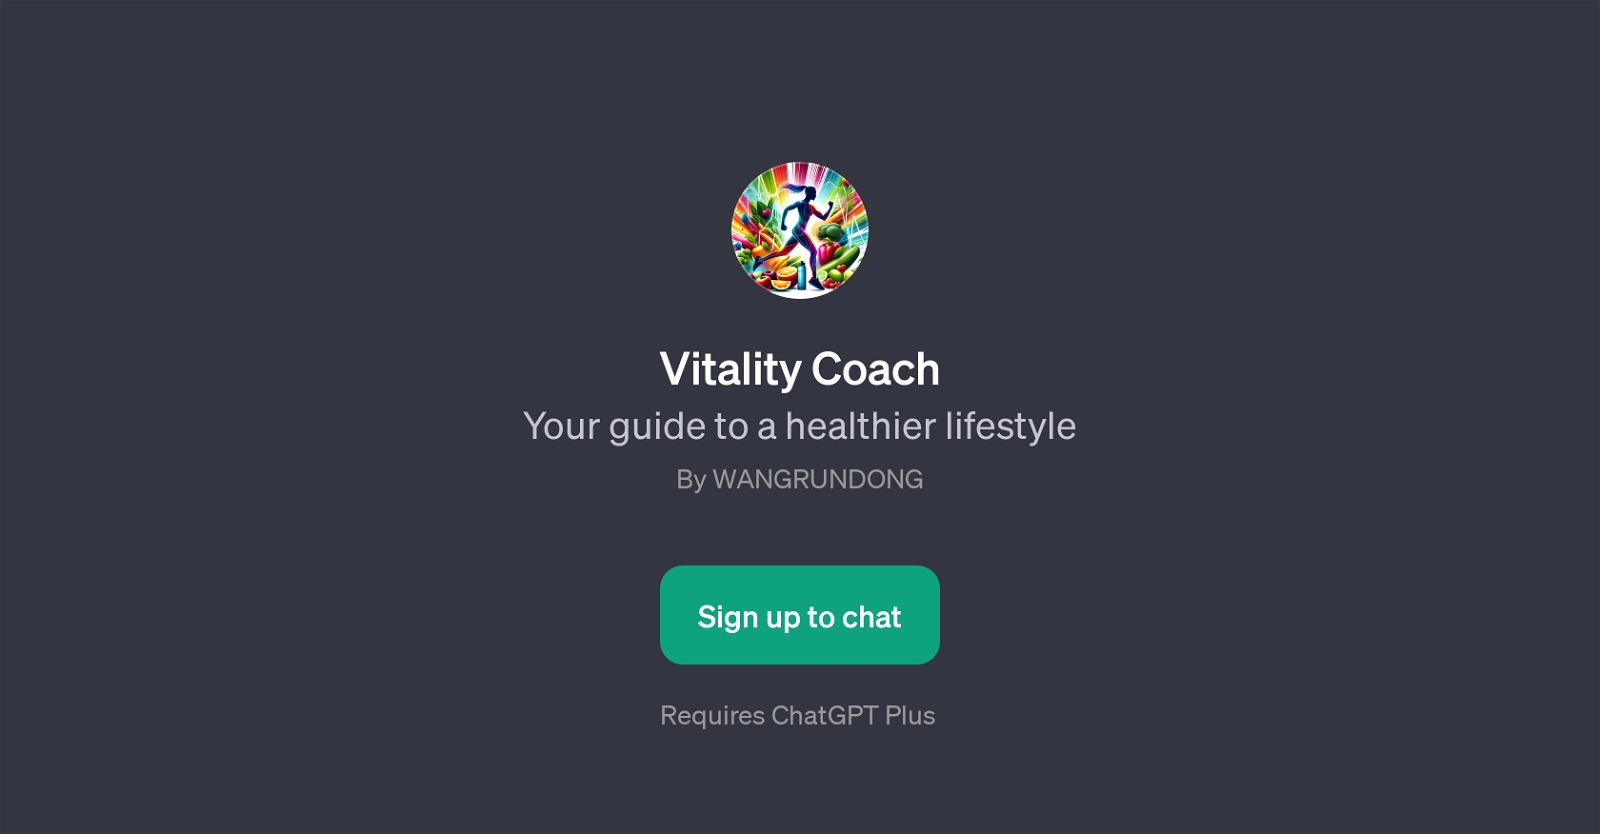 Vitality Coach website